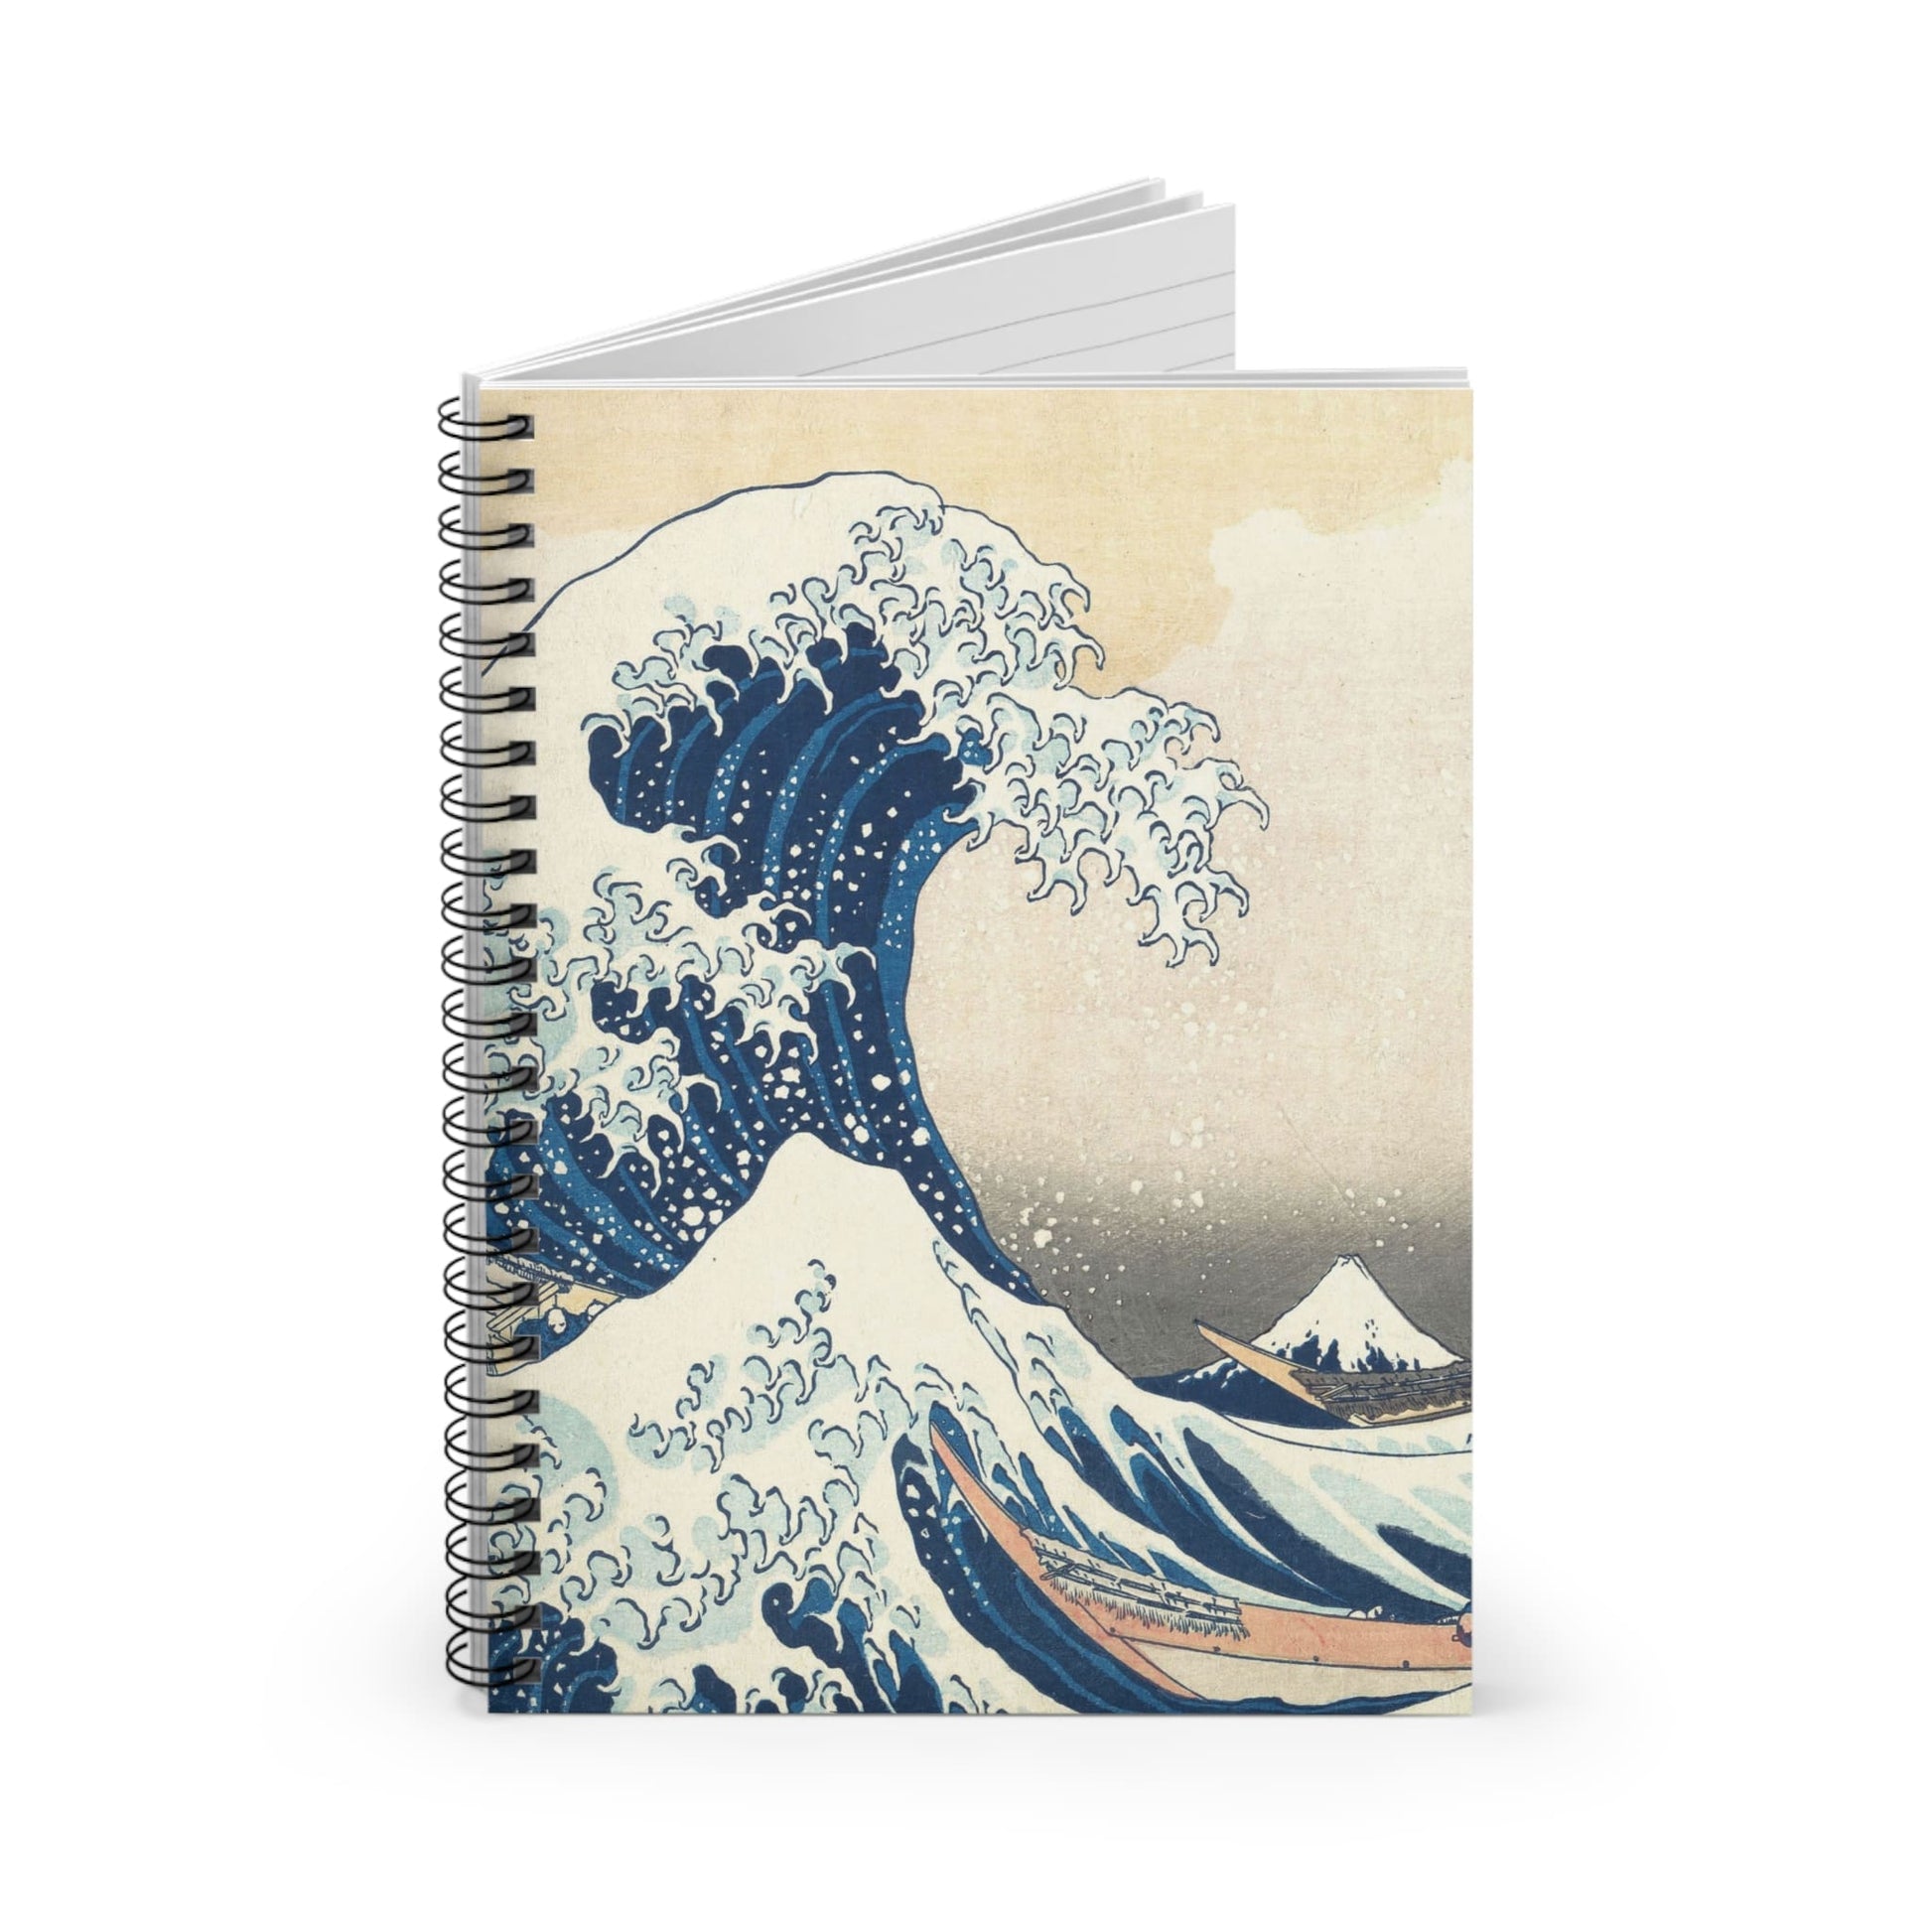 Big Wave Spiral Notebook Standing up on White Desk